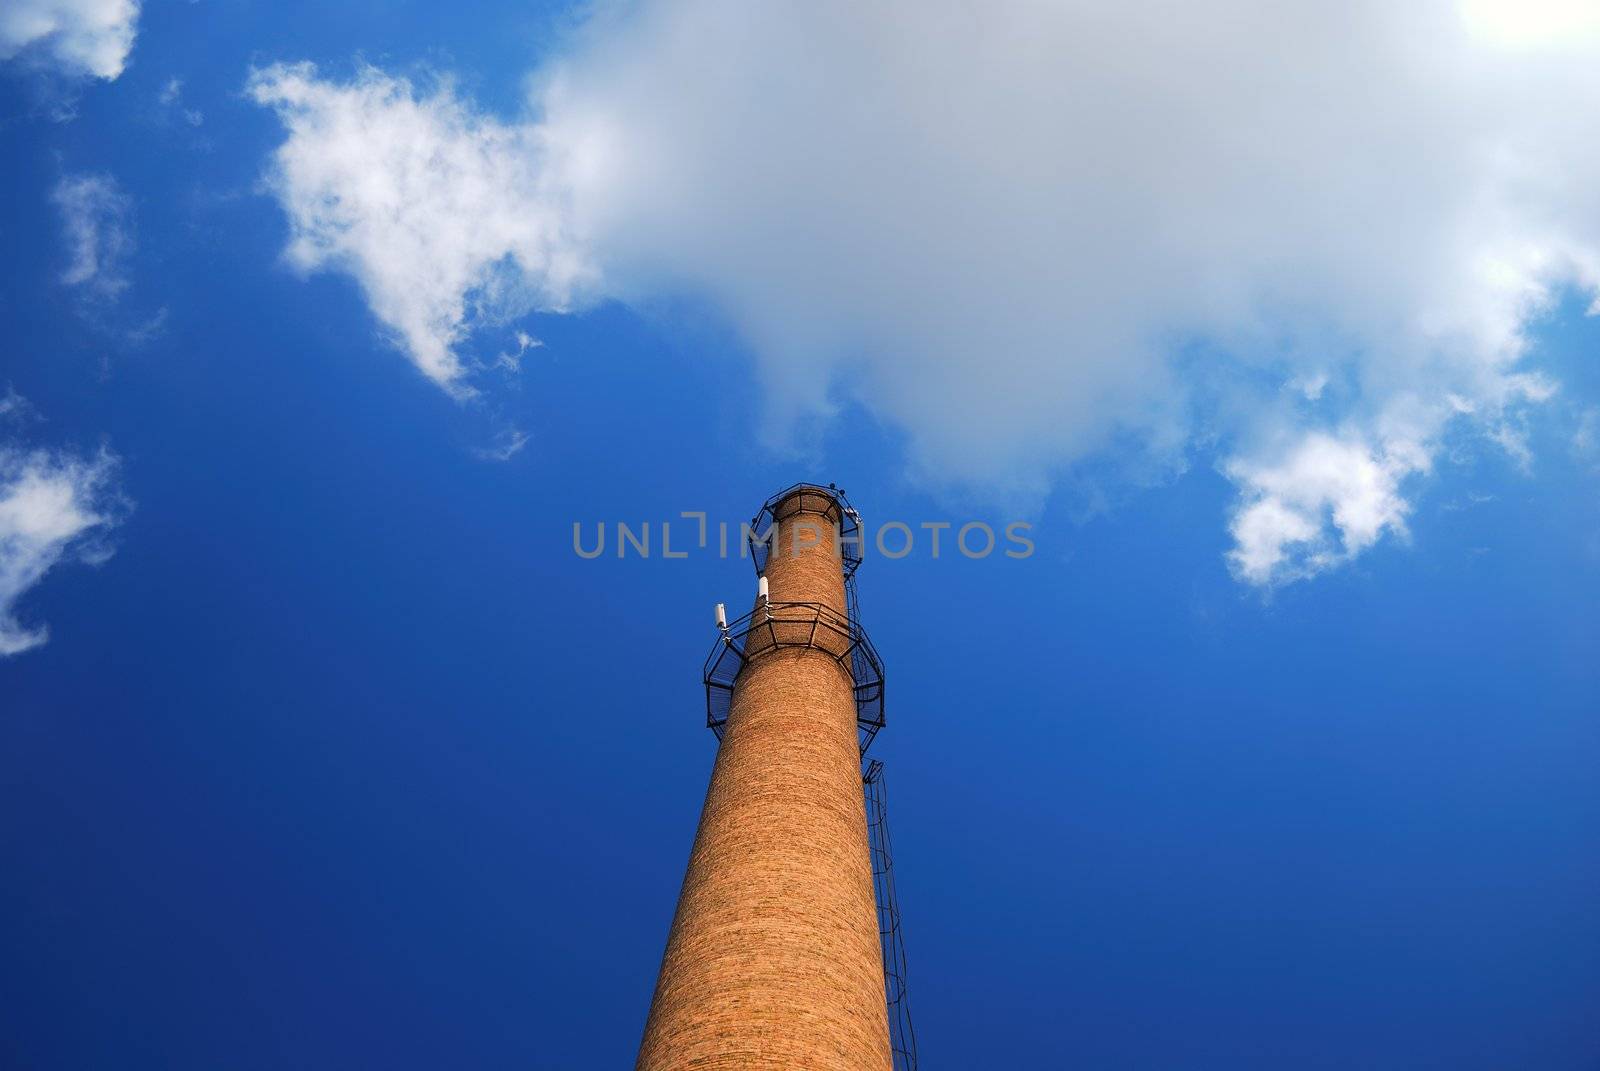 urban chimney-stalk on a background cloudy sky